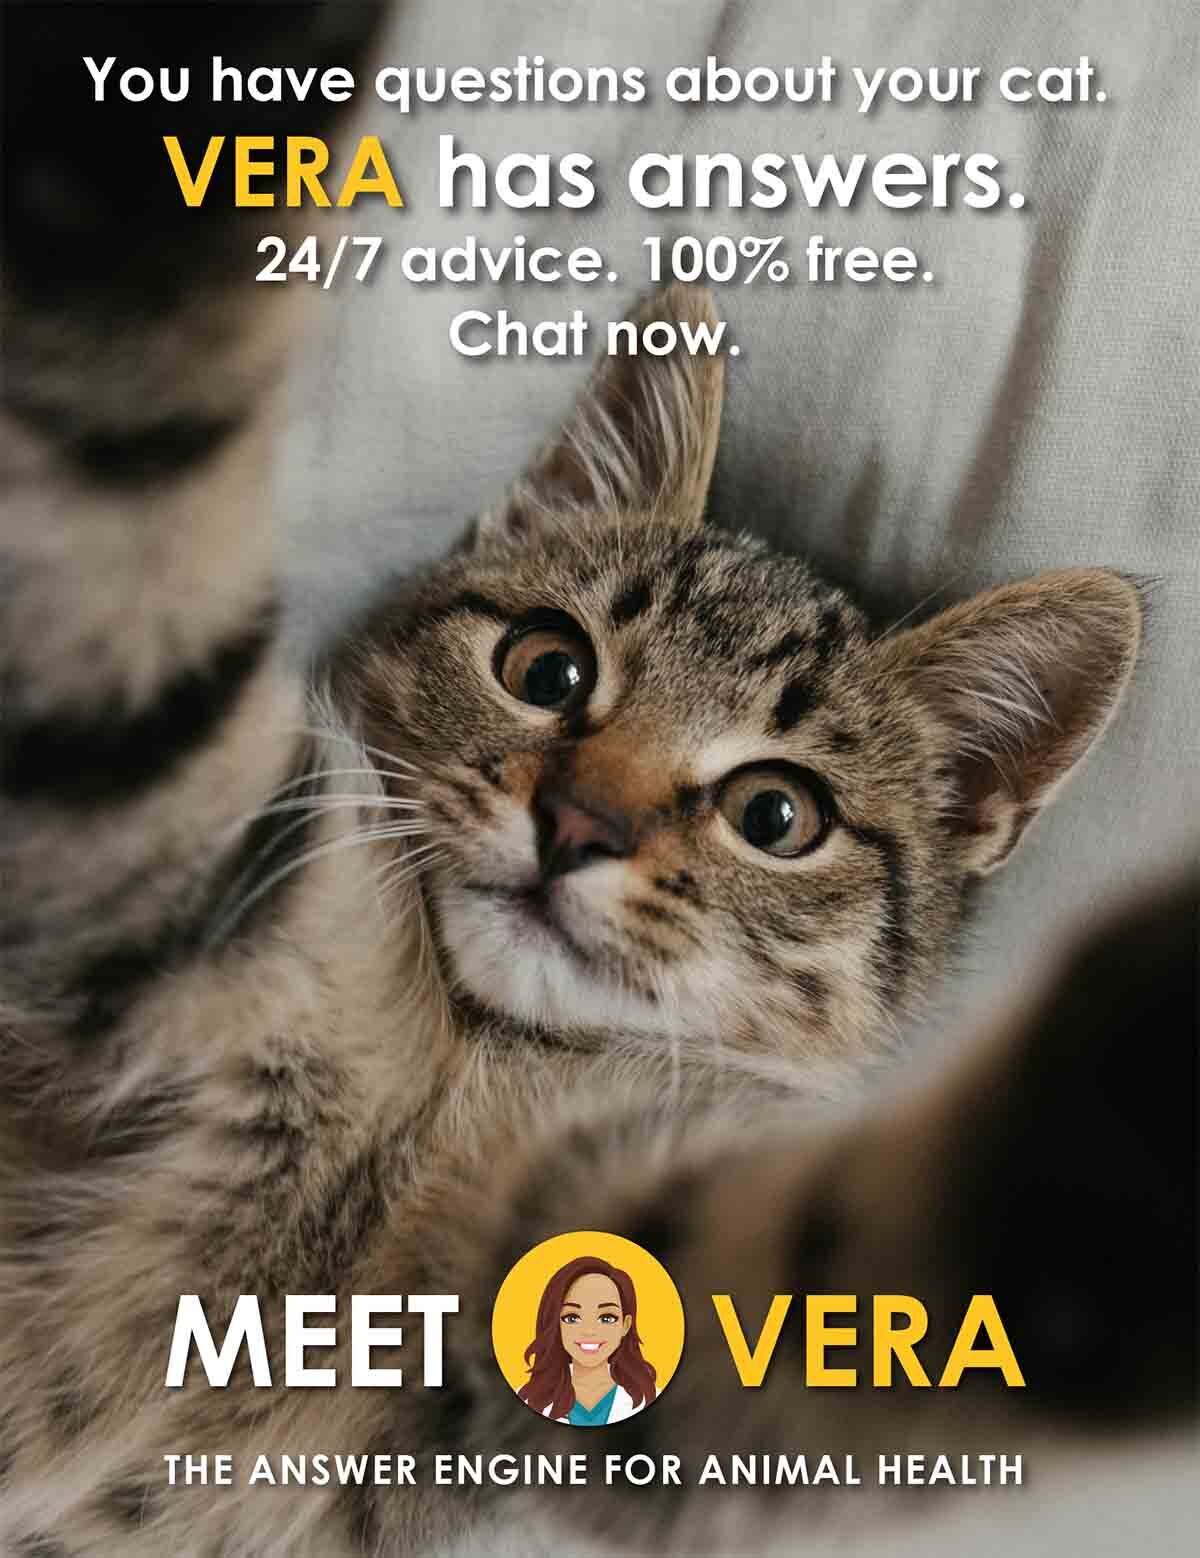 Meet VERA